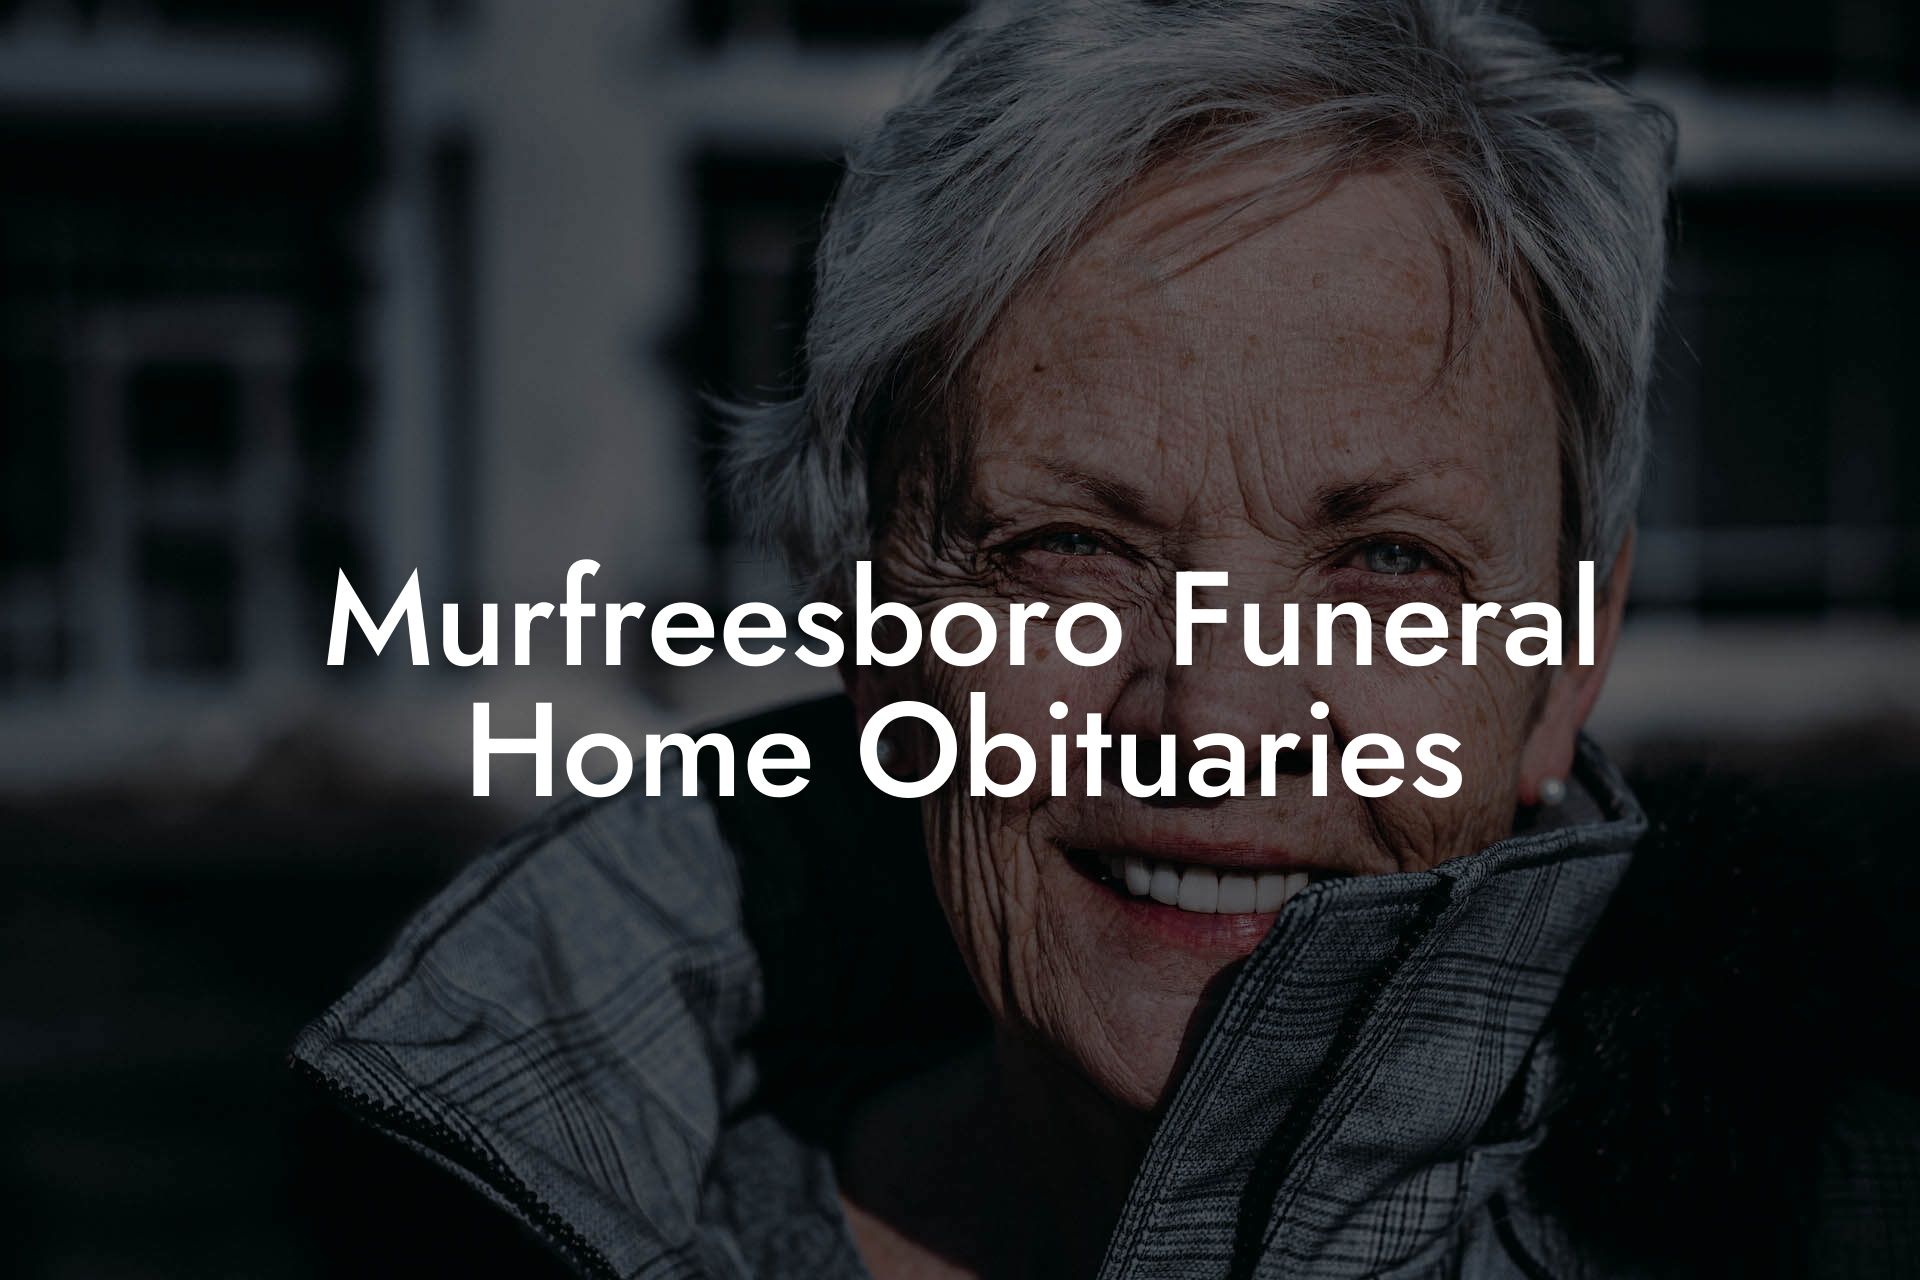 Murfreesboro Funeral Home Obituaries